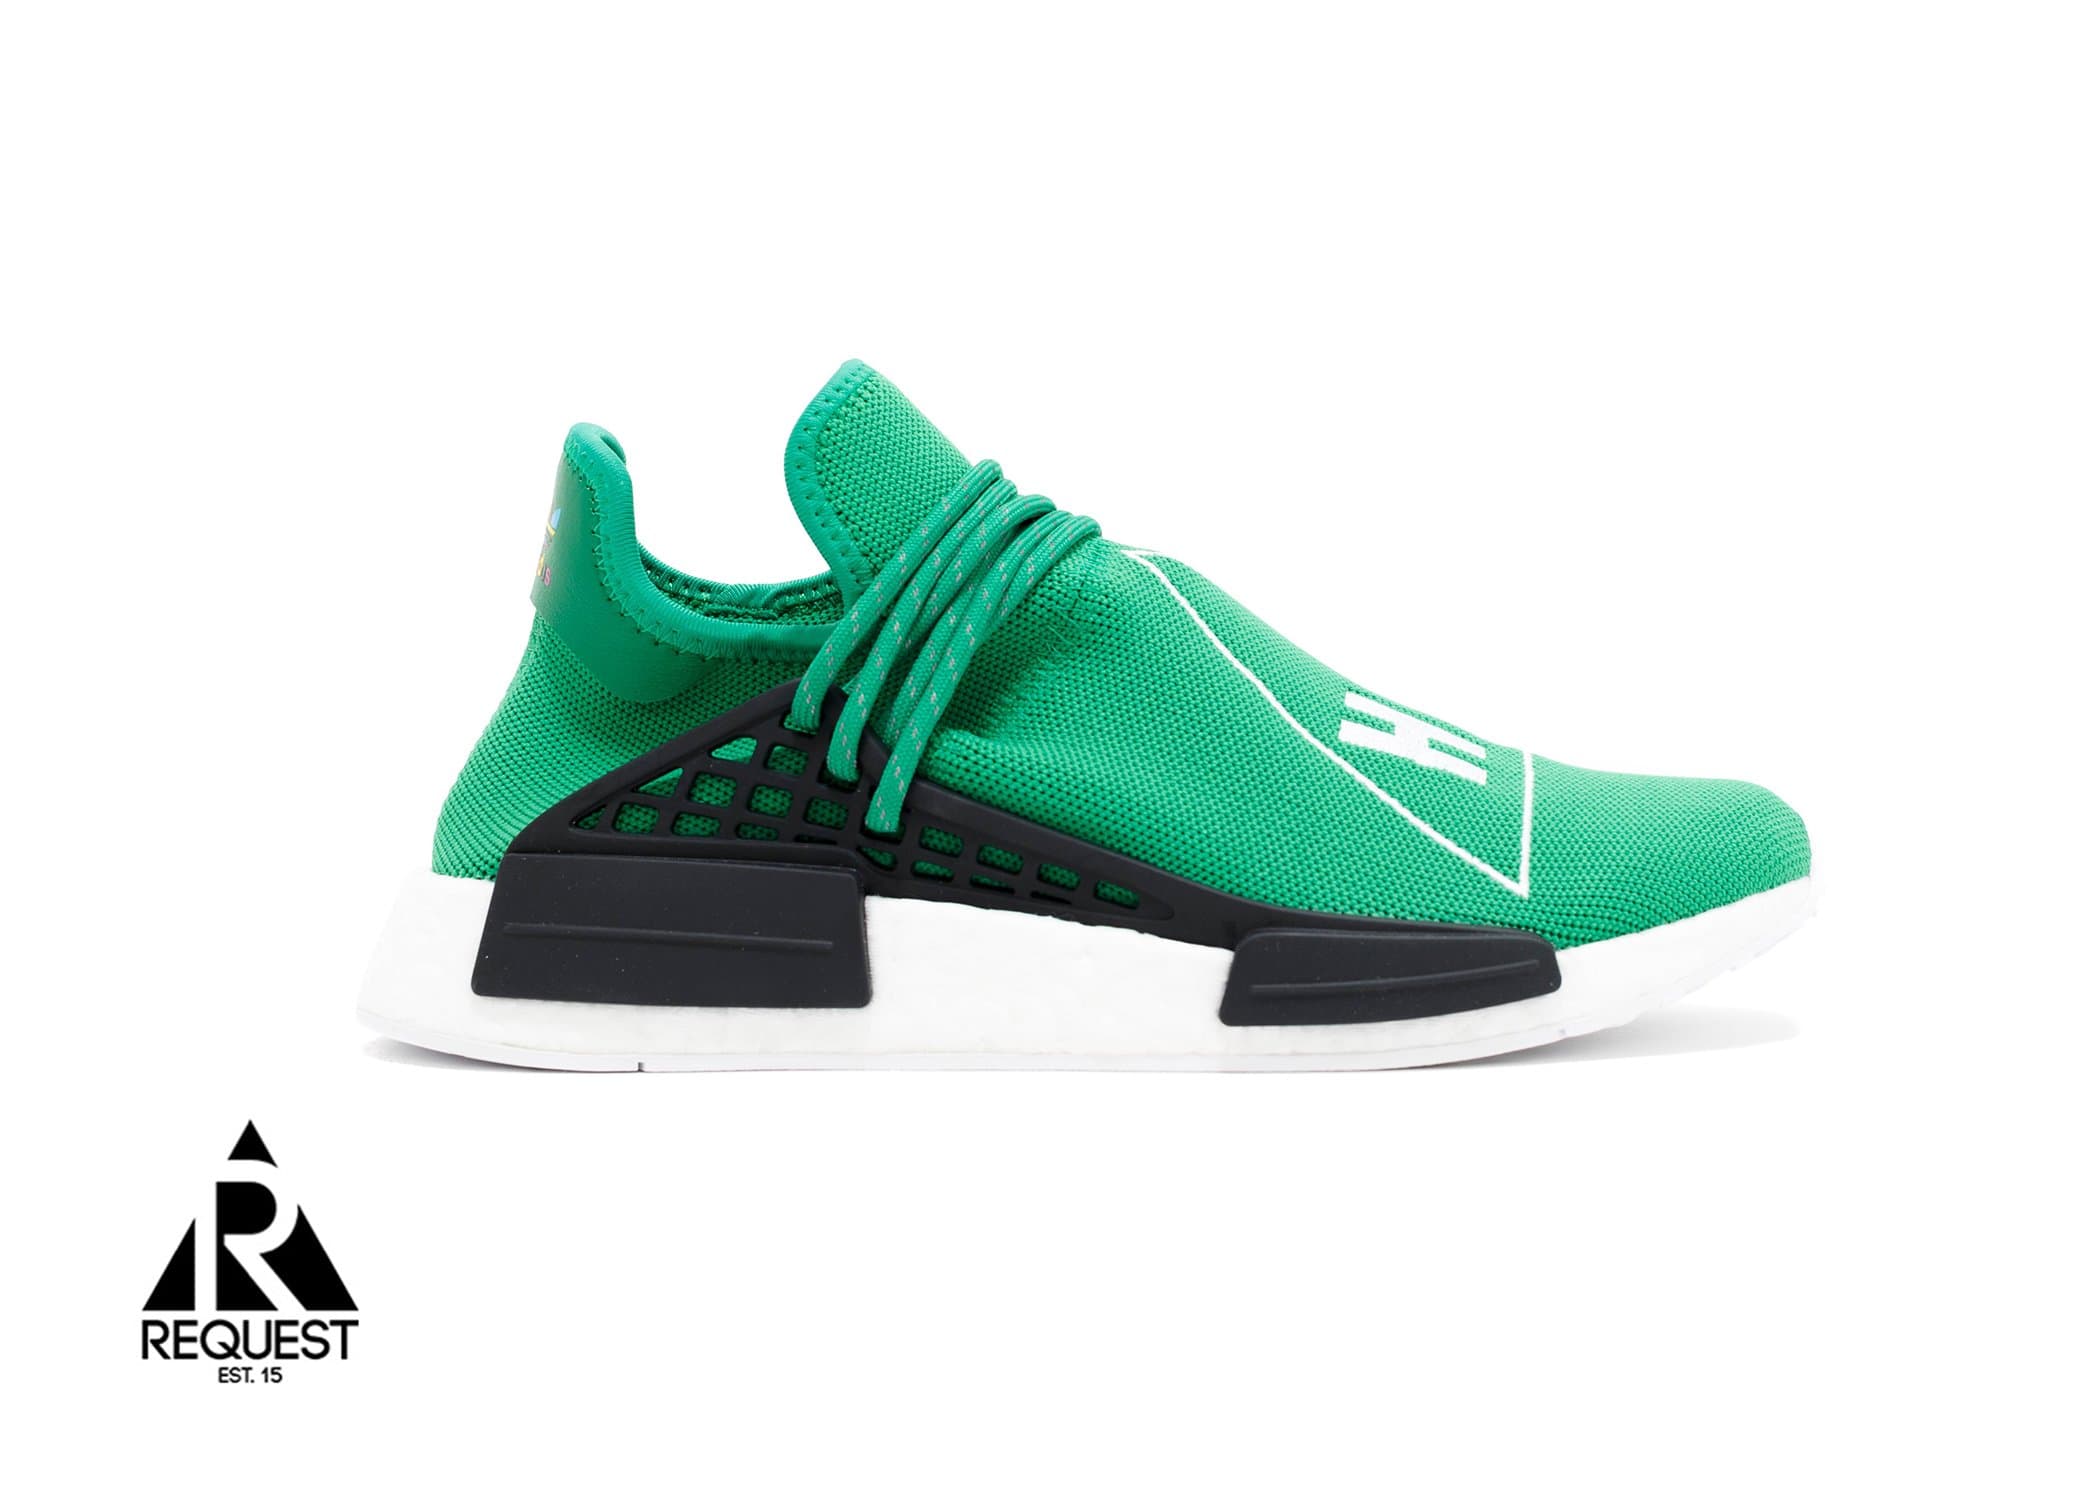 Adidas Human Race NMD “Green”